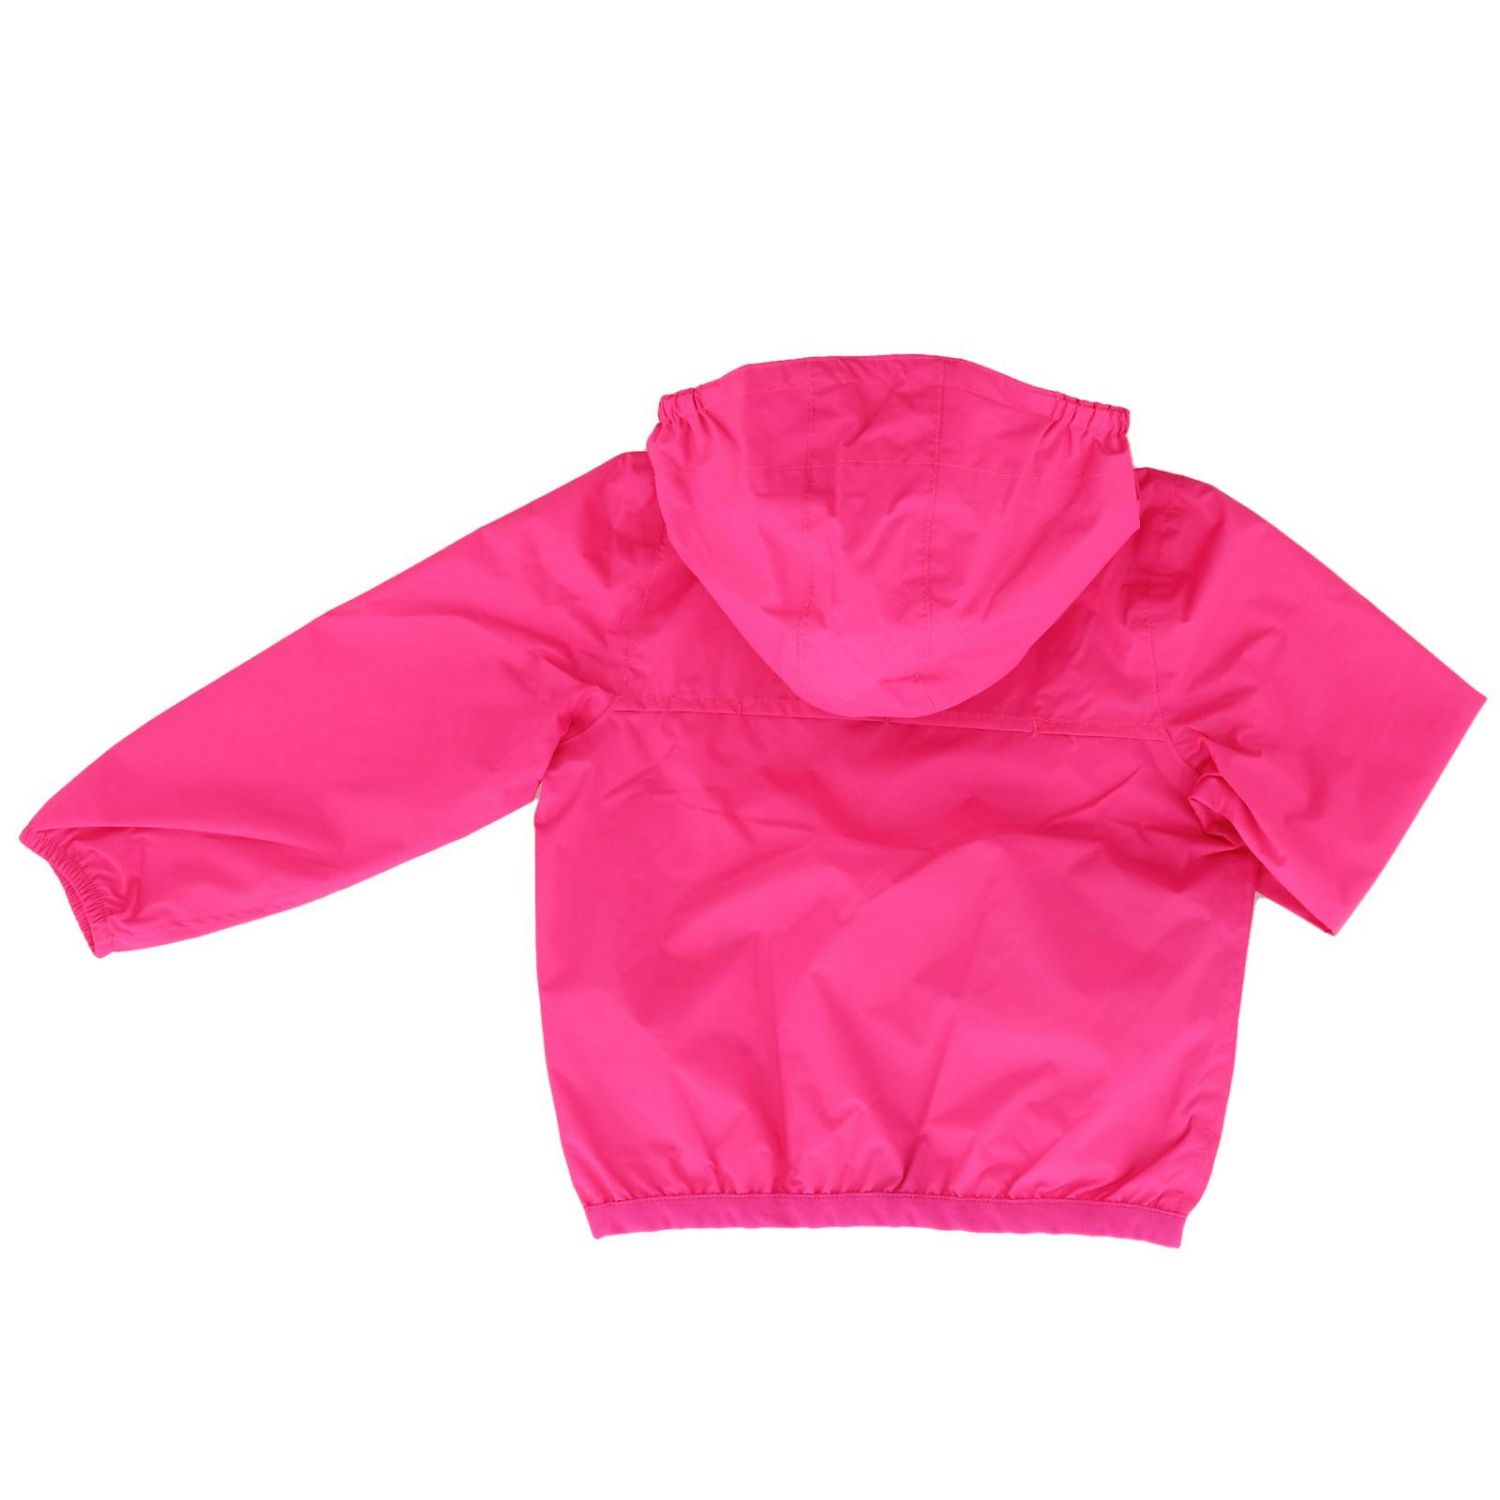 K-Way Outlet: Jacket kids | Jacket K-Way Kids Pink | Jacket K-Way ...